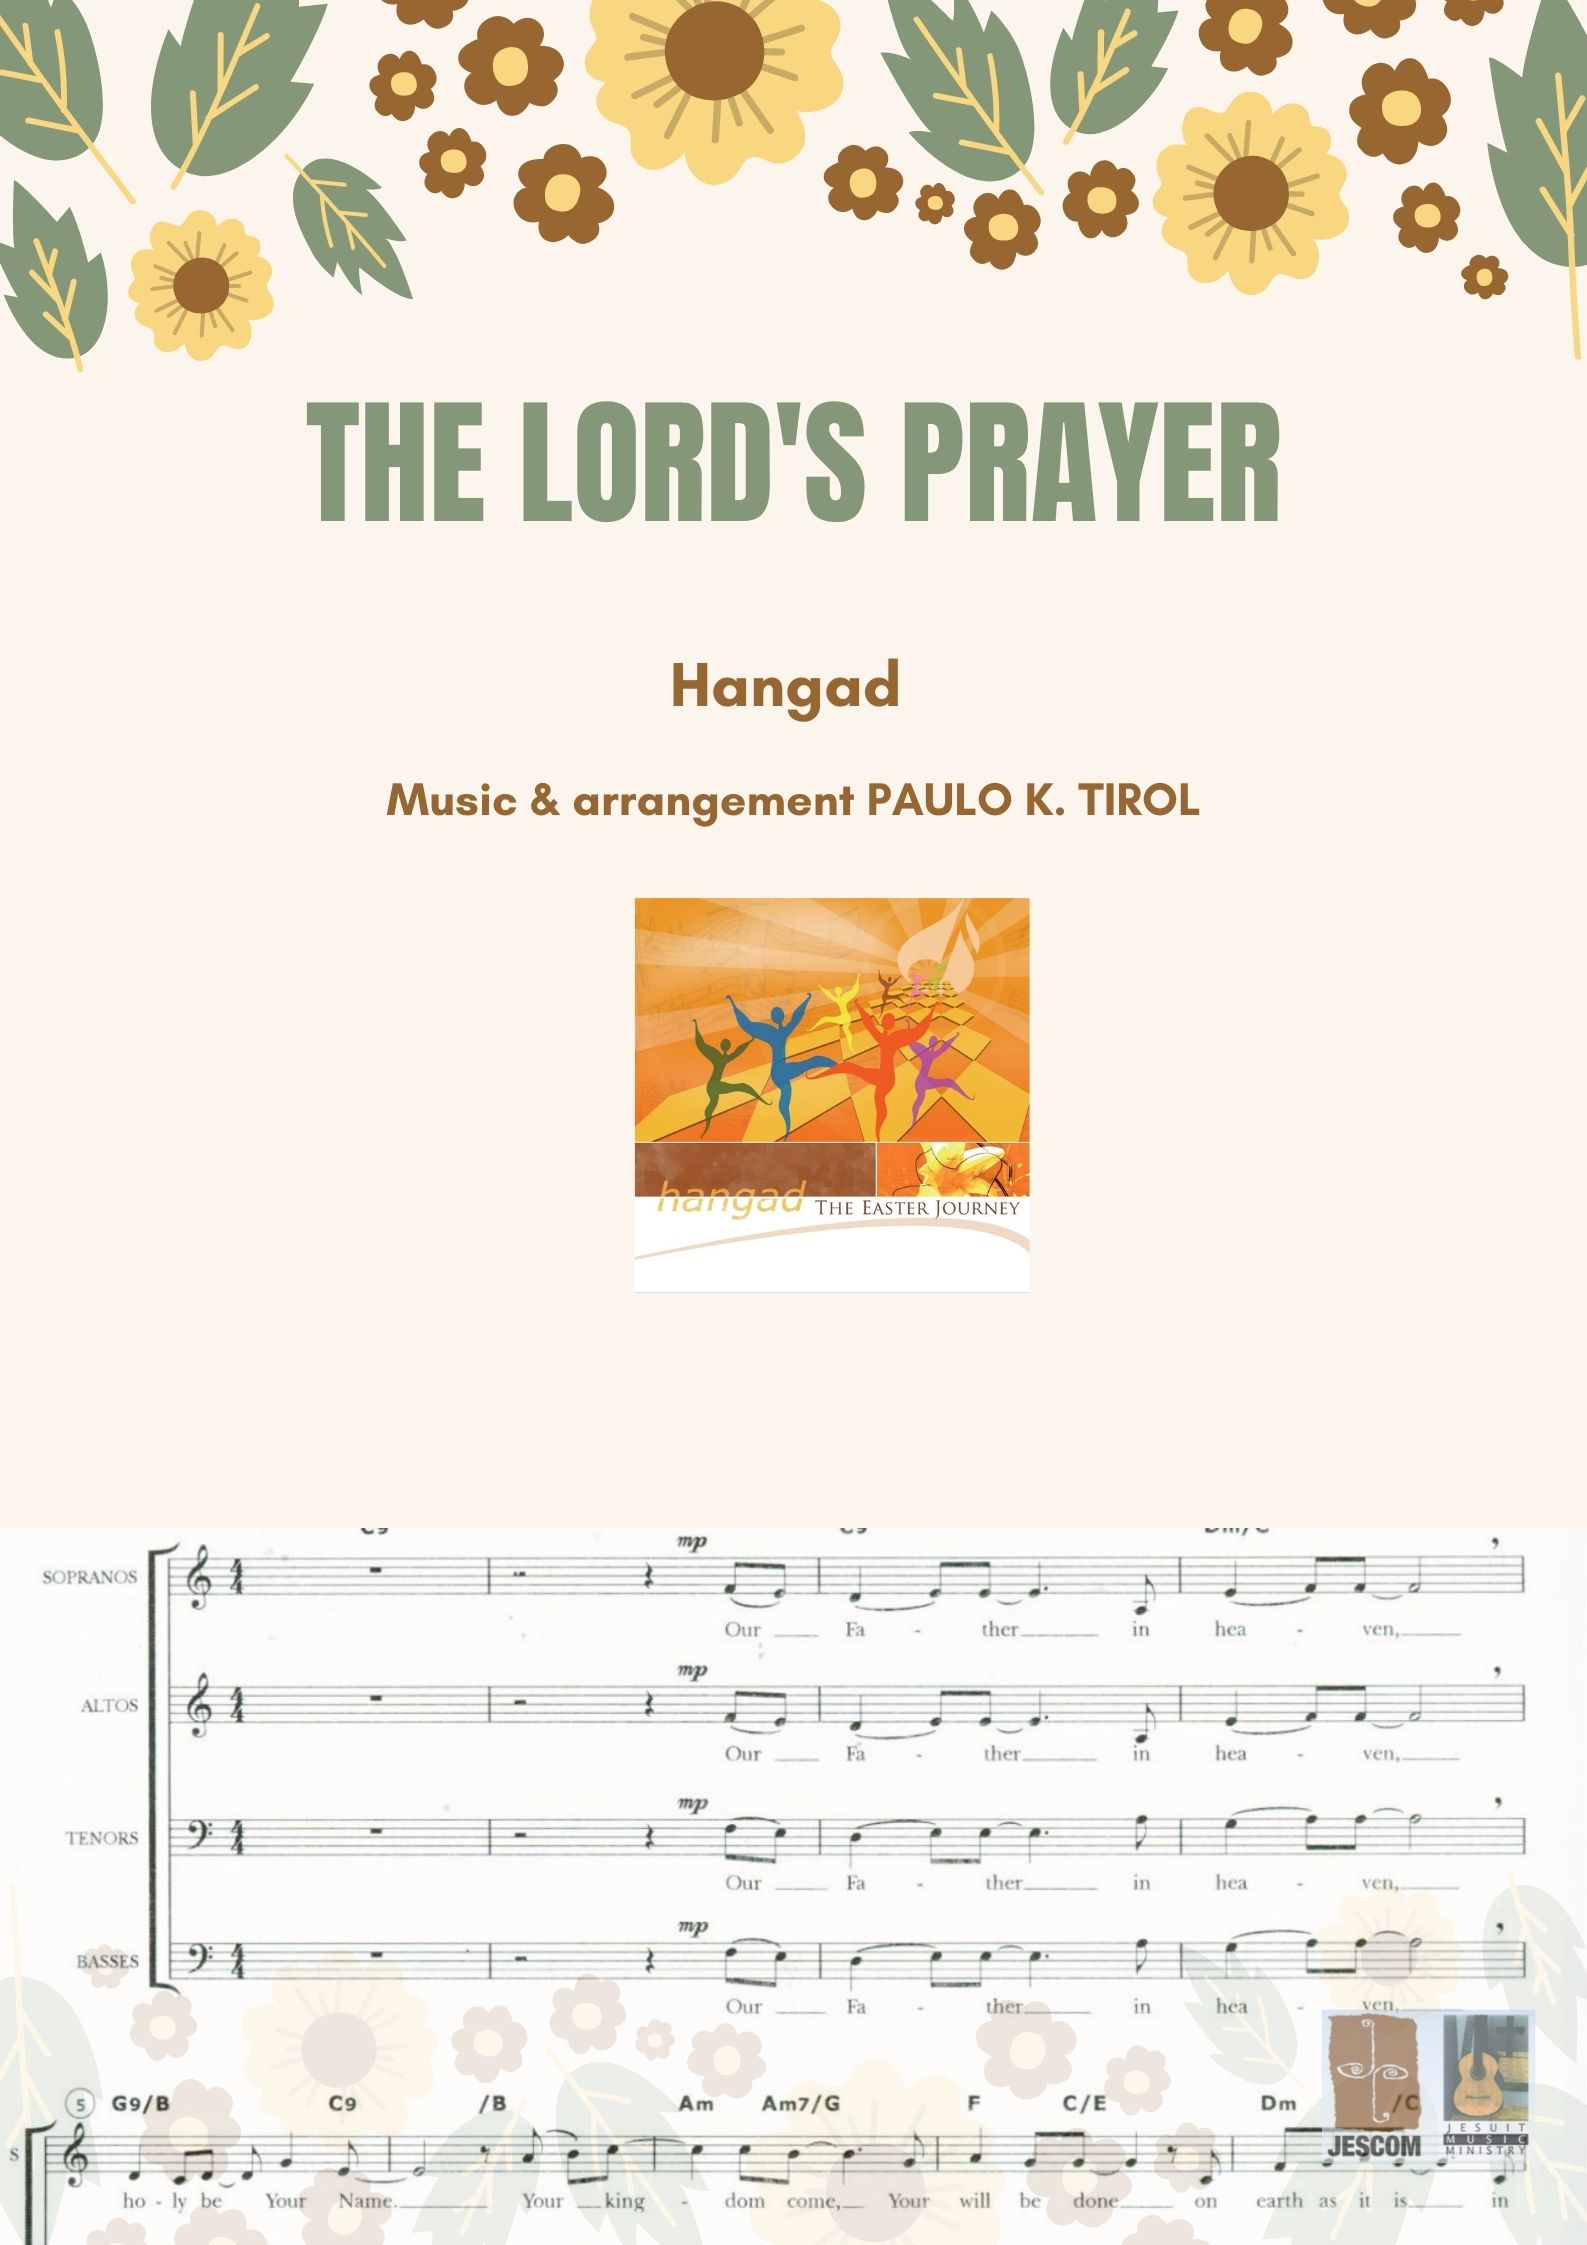 THE LORD’S PRAYER by Tirol – Music Sheet